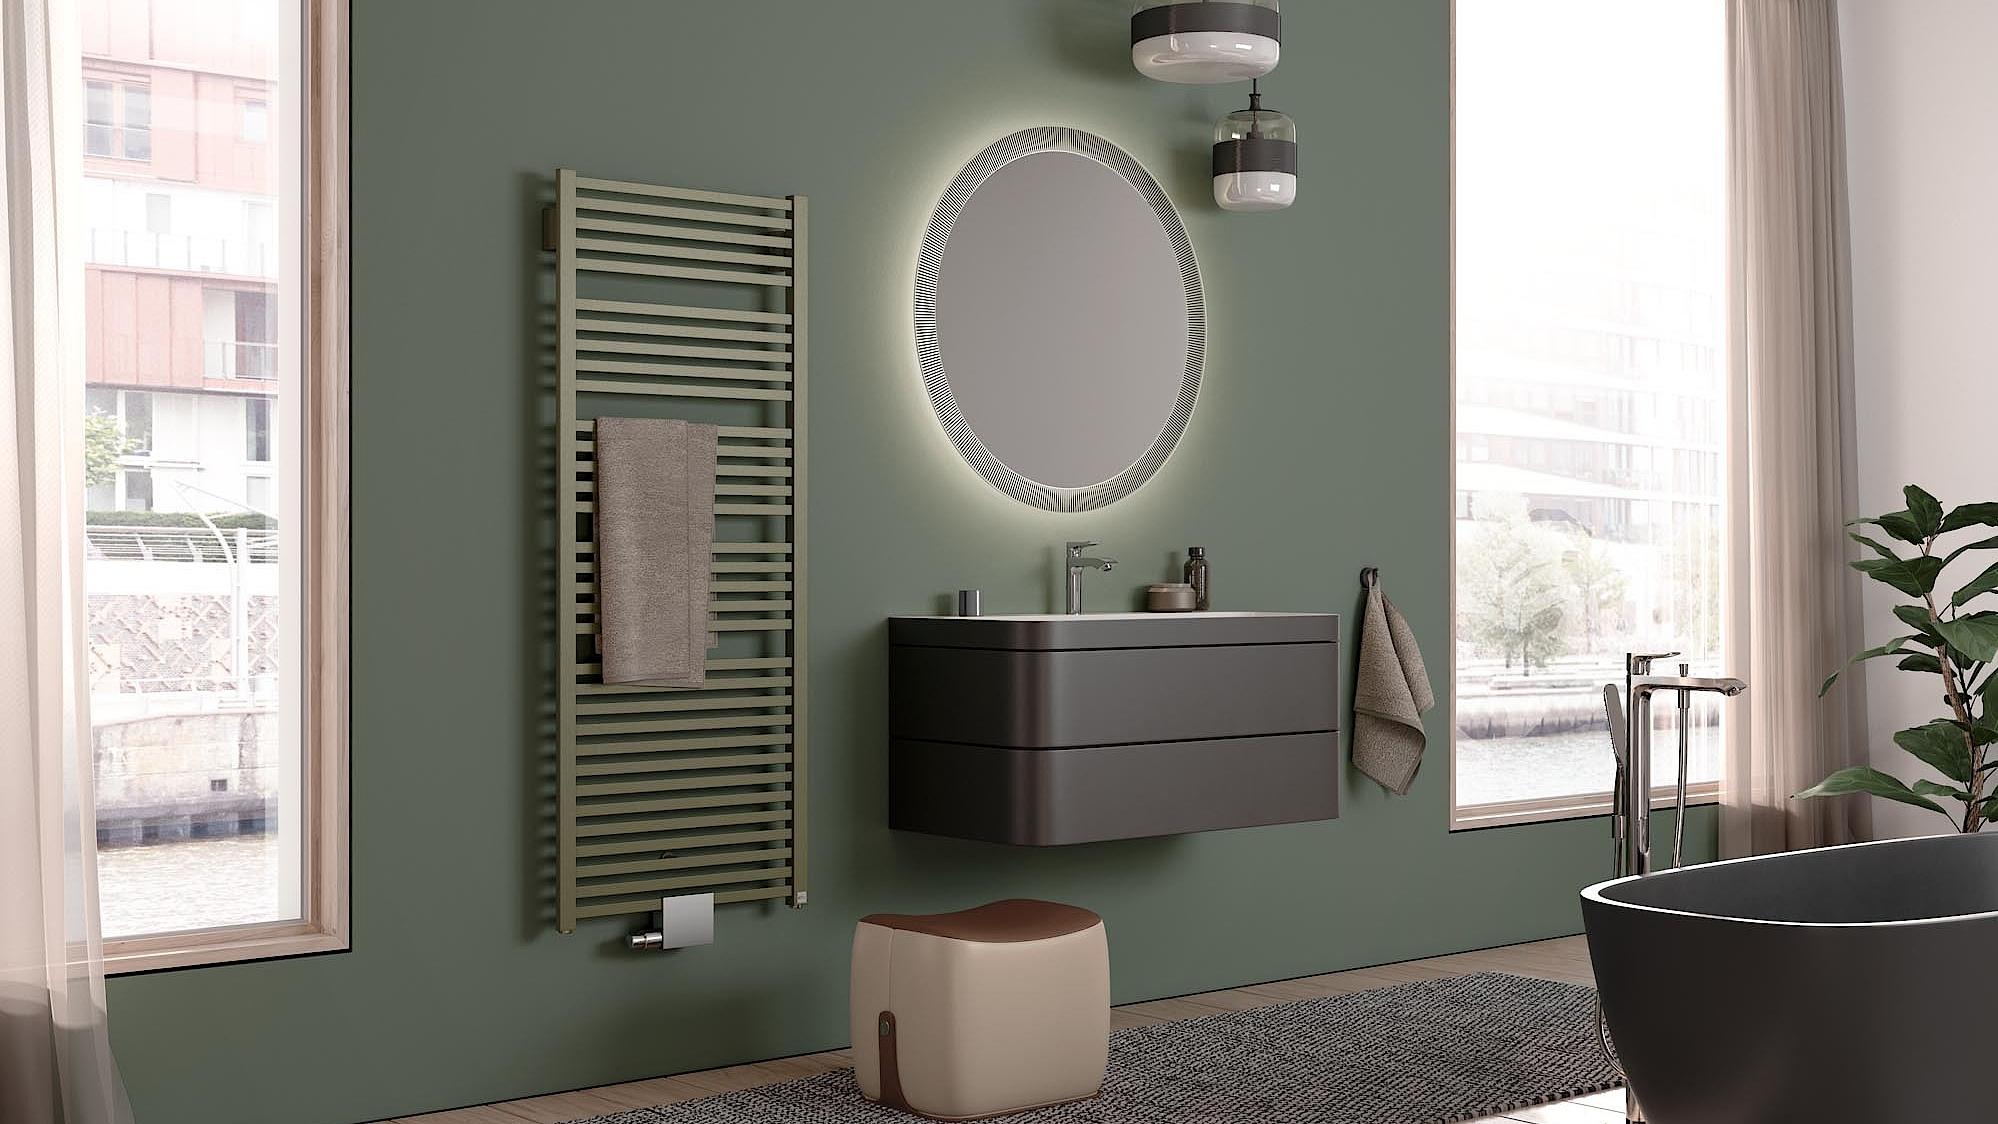 Kermi Geneo quadris design and bathroom radiators – unusually shaped elements, attractive appearance.